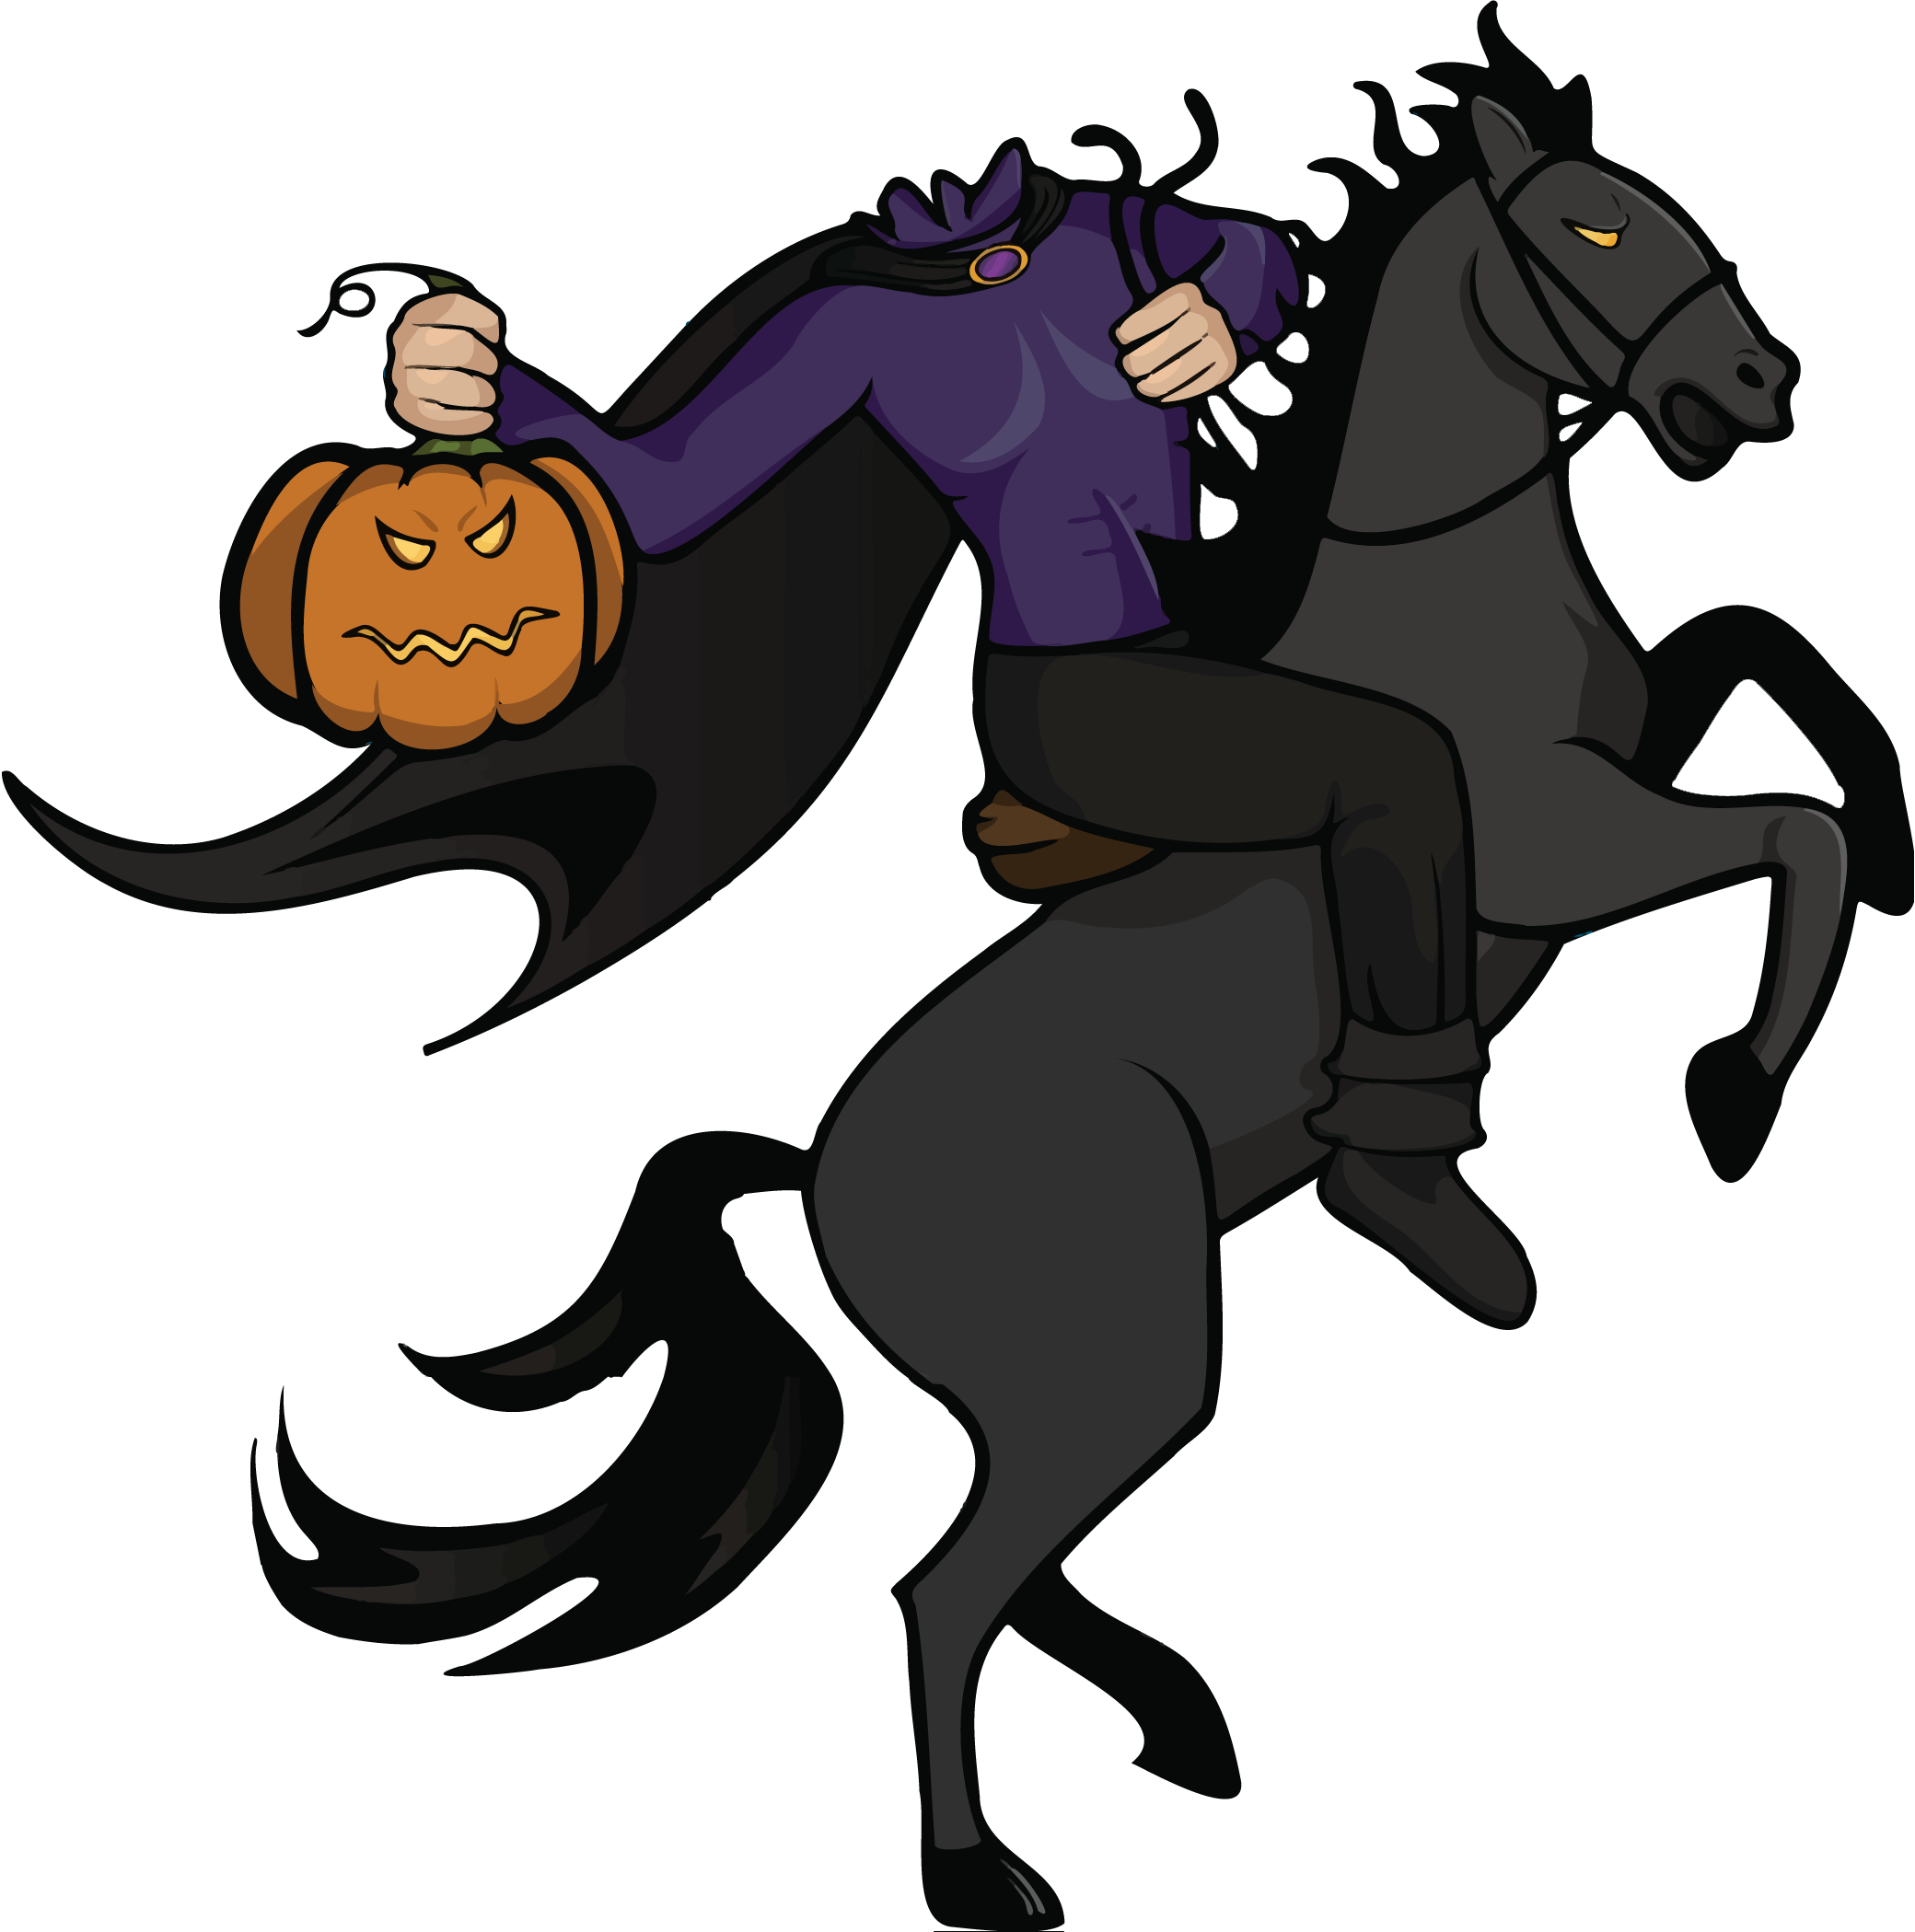 Funky horse-themed hero image